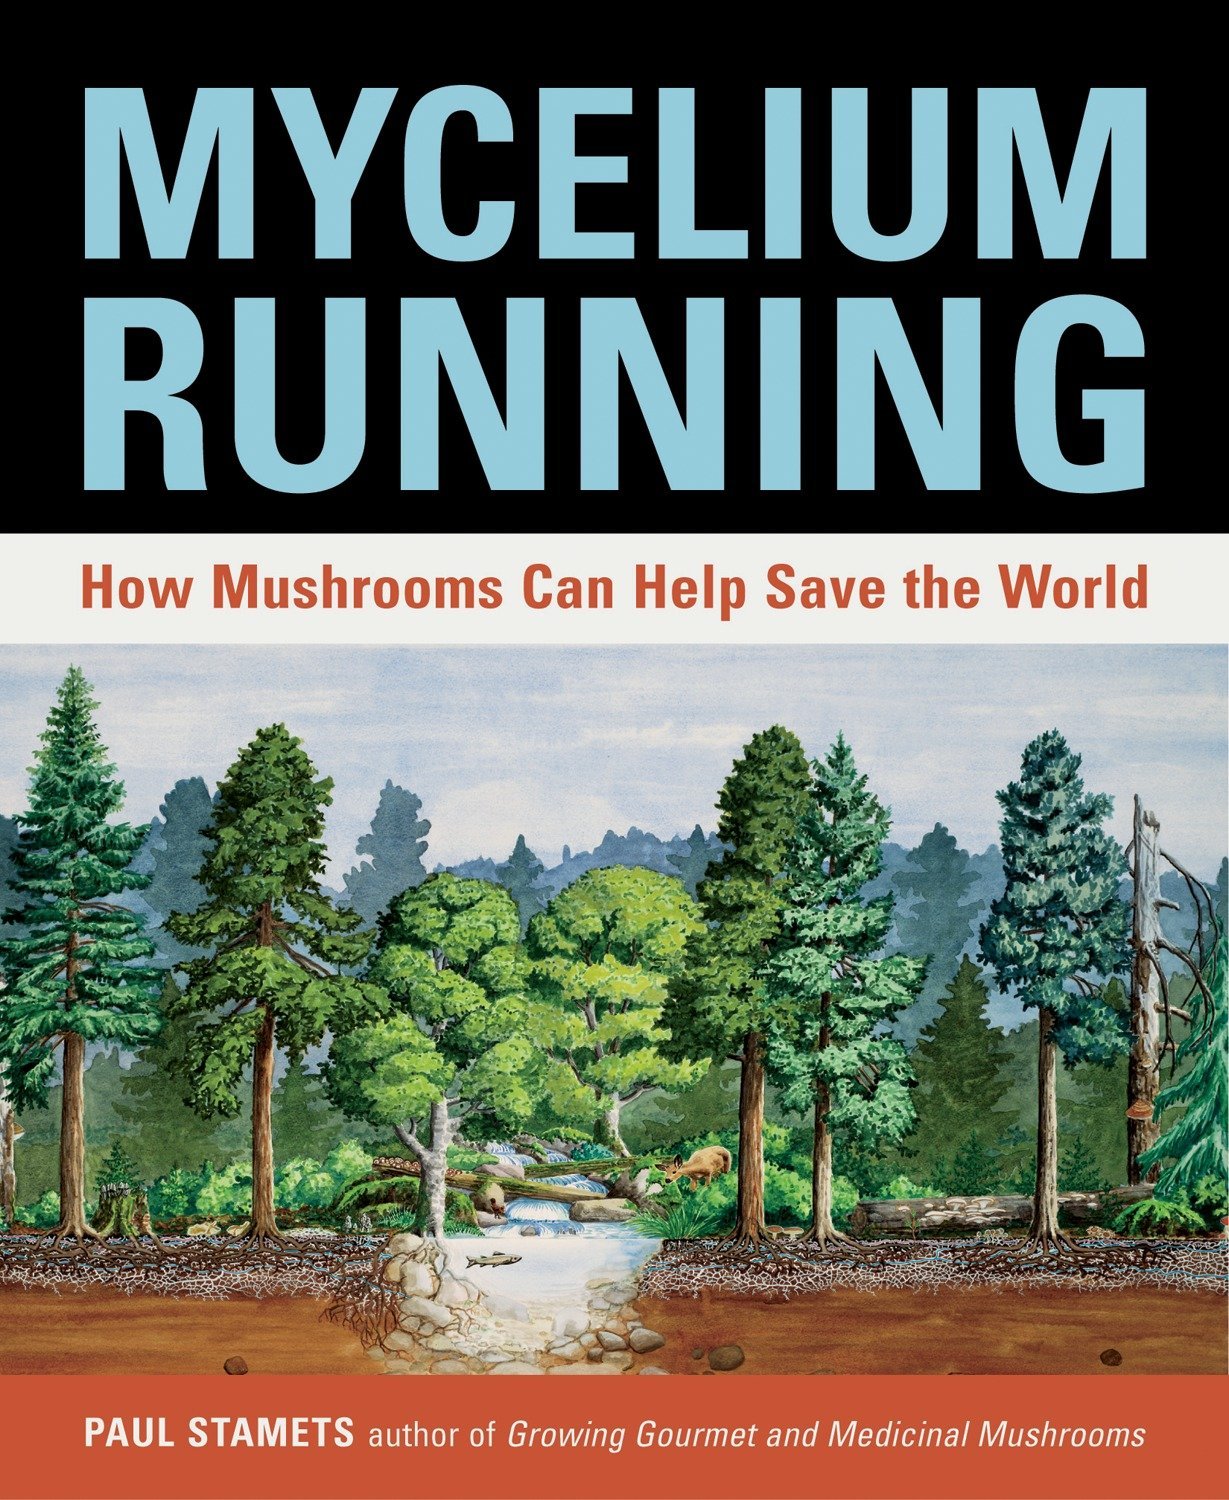 MycoPunks - Mycelium Running: How Mushrooms Can Help Save the World - Book